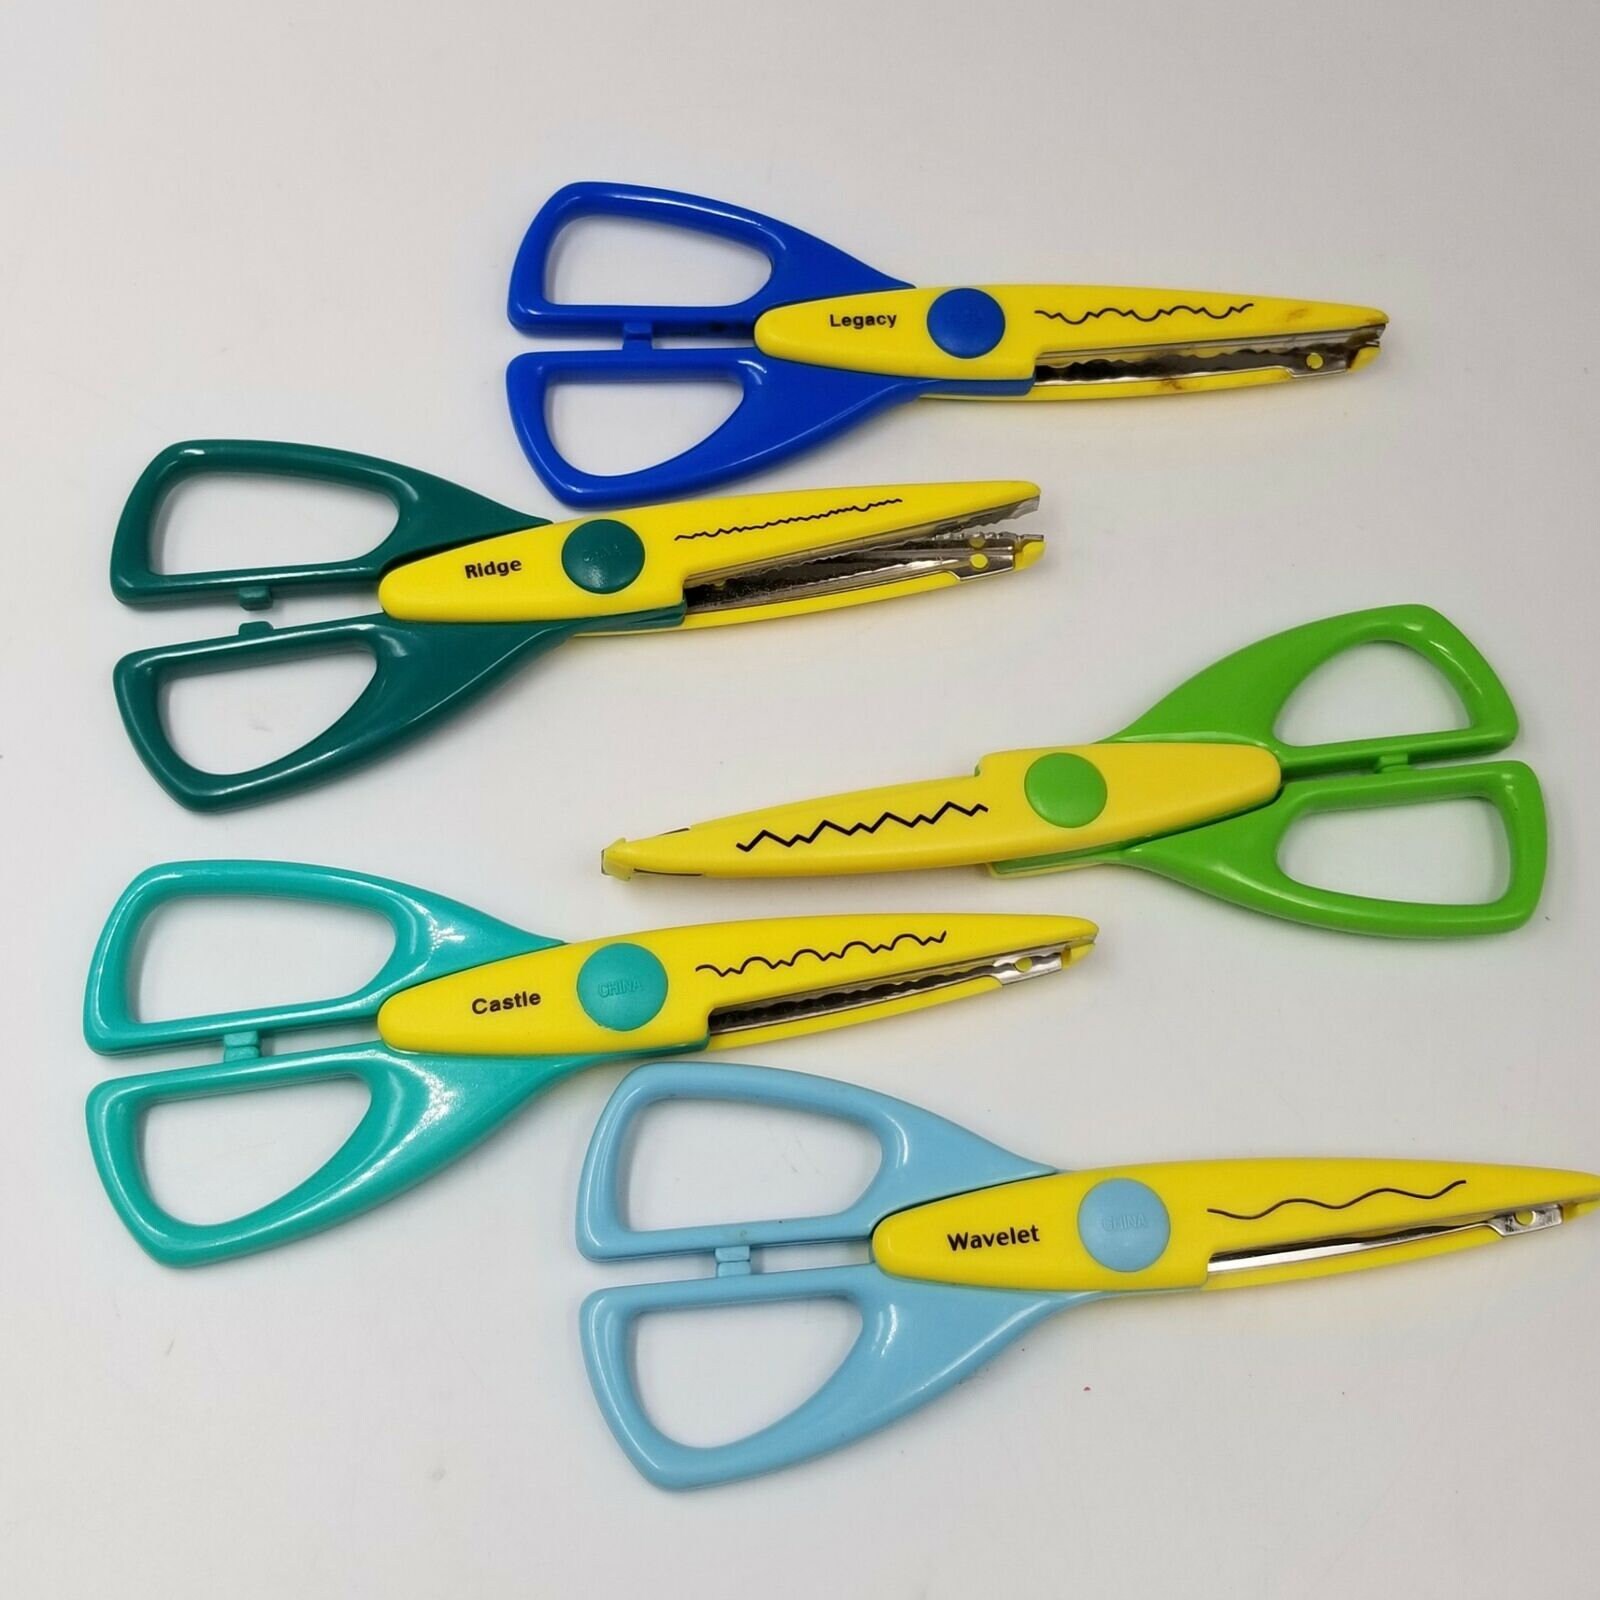 Decorative Edge Craft Scissors for Scrapbooking and Creative Paper